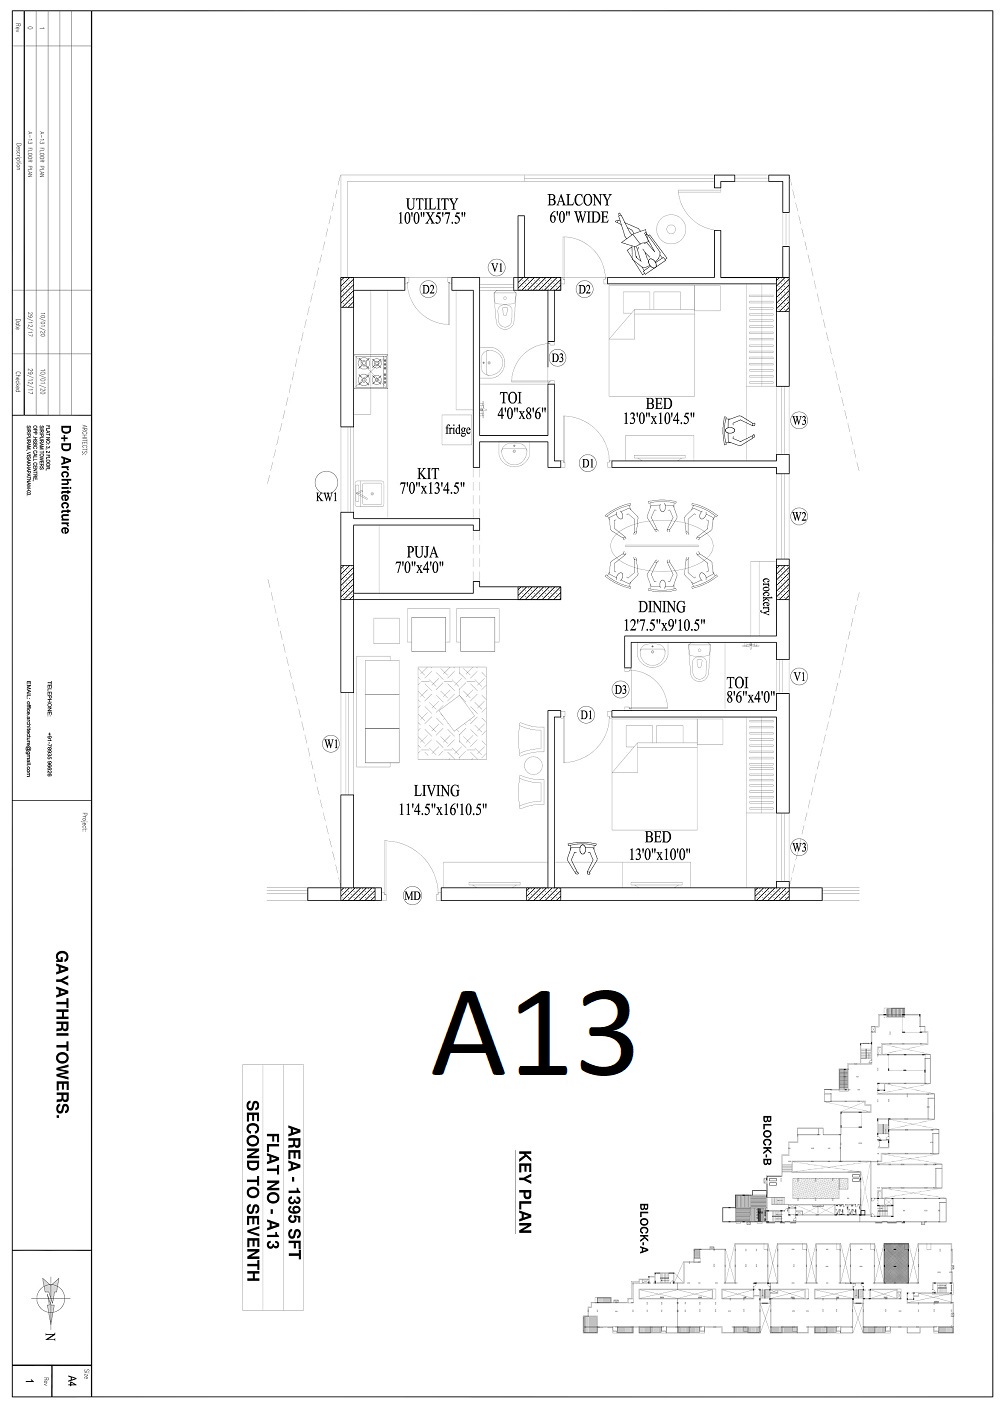 A13 - Tipcal Floor Plan